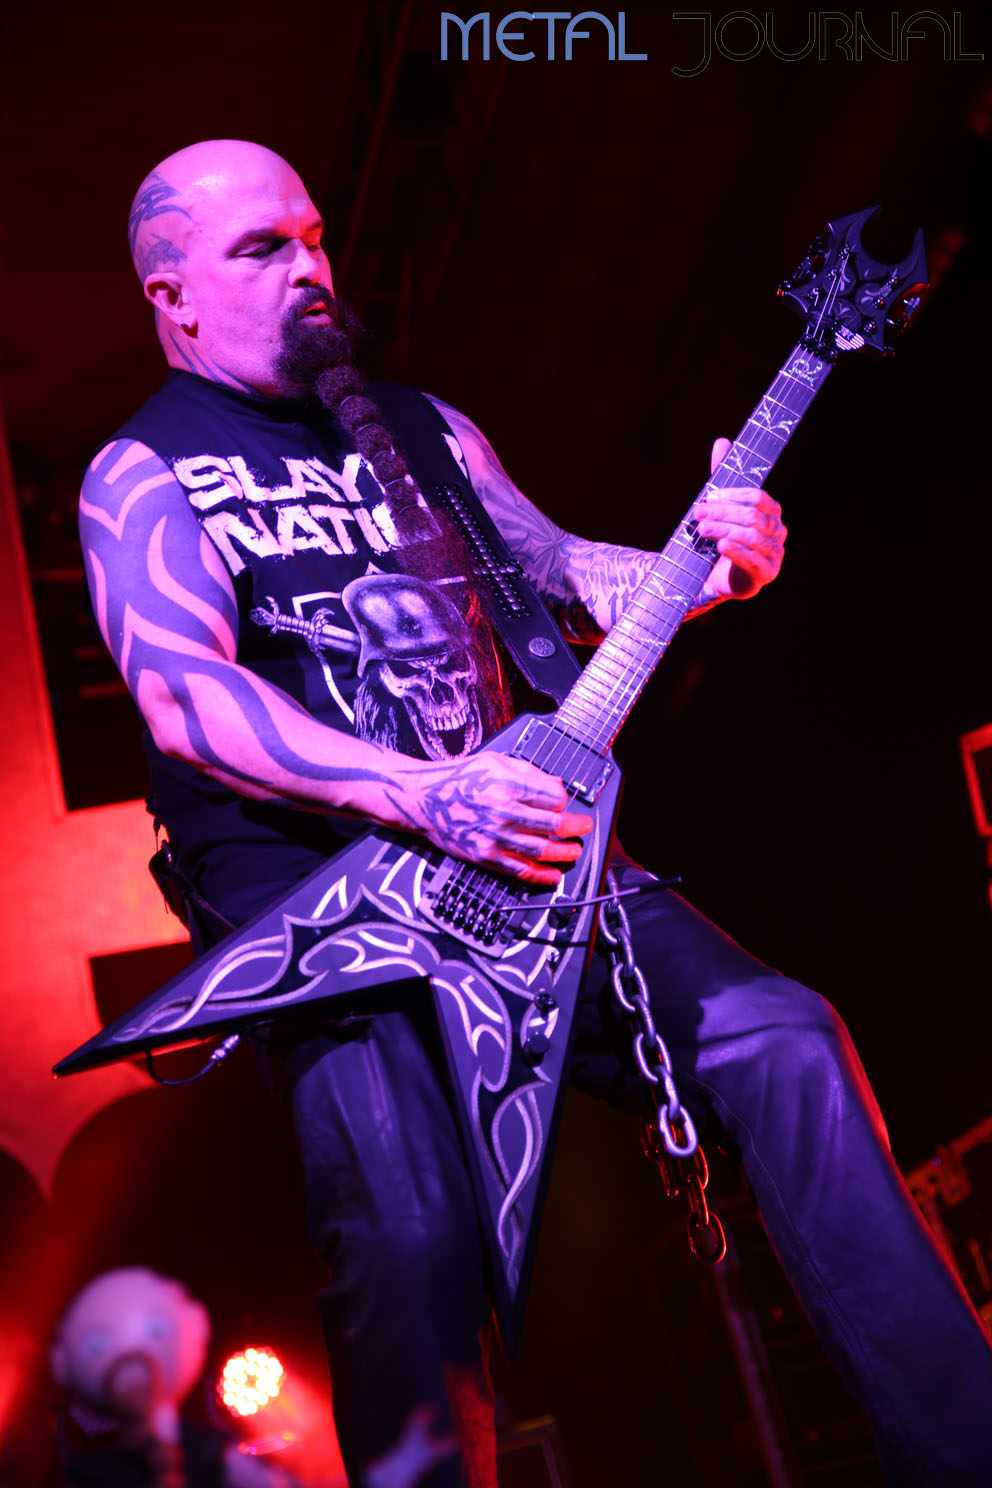 slayer-metal journal Bilbao 30-10-2015 pic 3